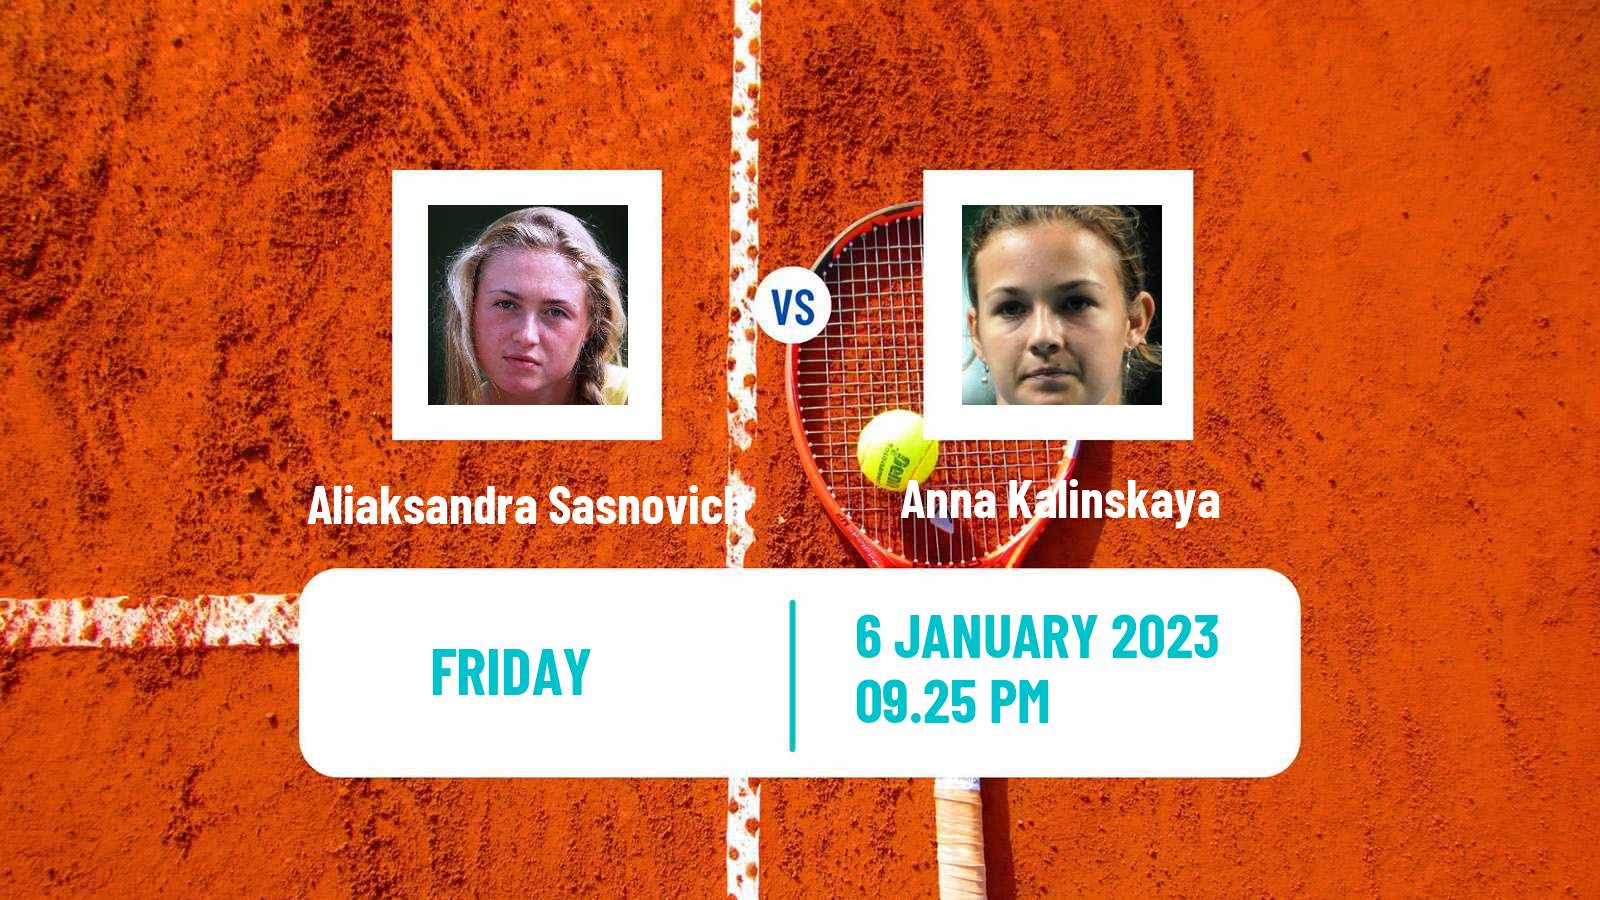 Tennis WTA Adelaide 2 Aliaksandra Sasnovich - Anna Kalinskaya